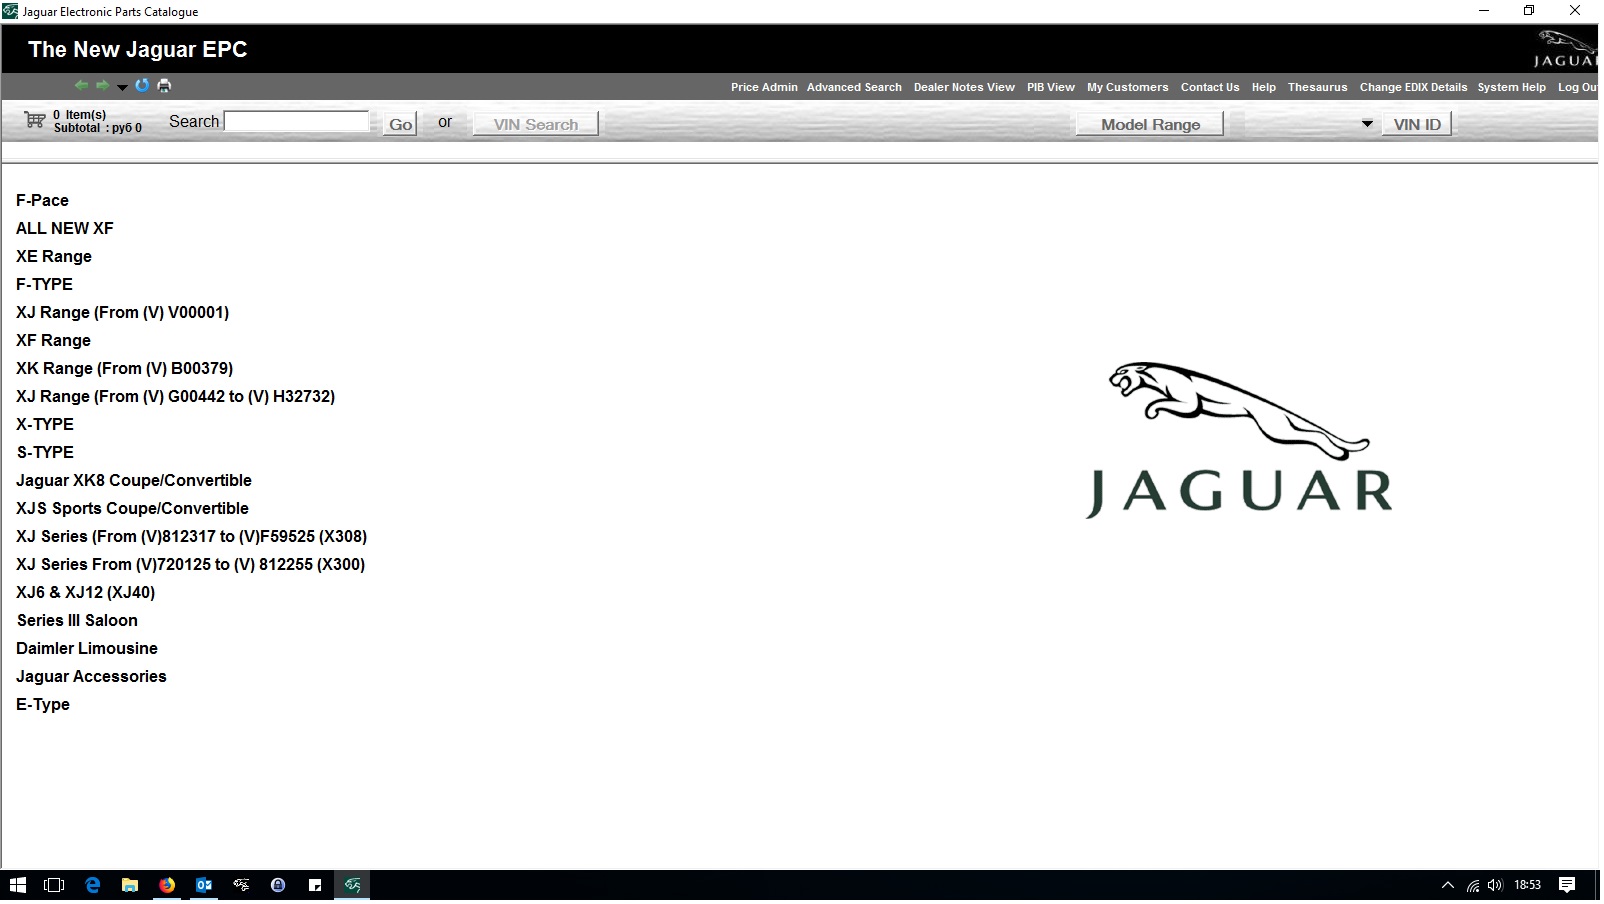 Workshop manual - Jaguar Forums - Jaguar Enthusiasts Forum